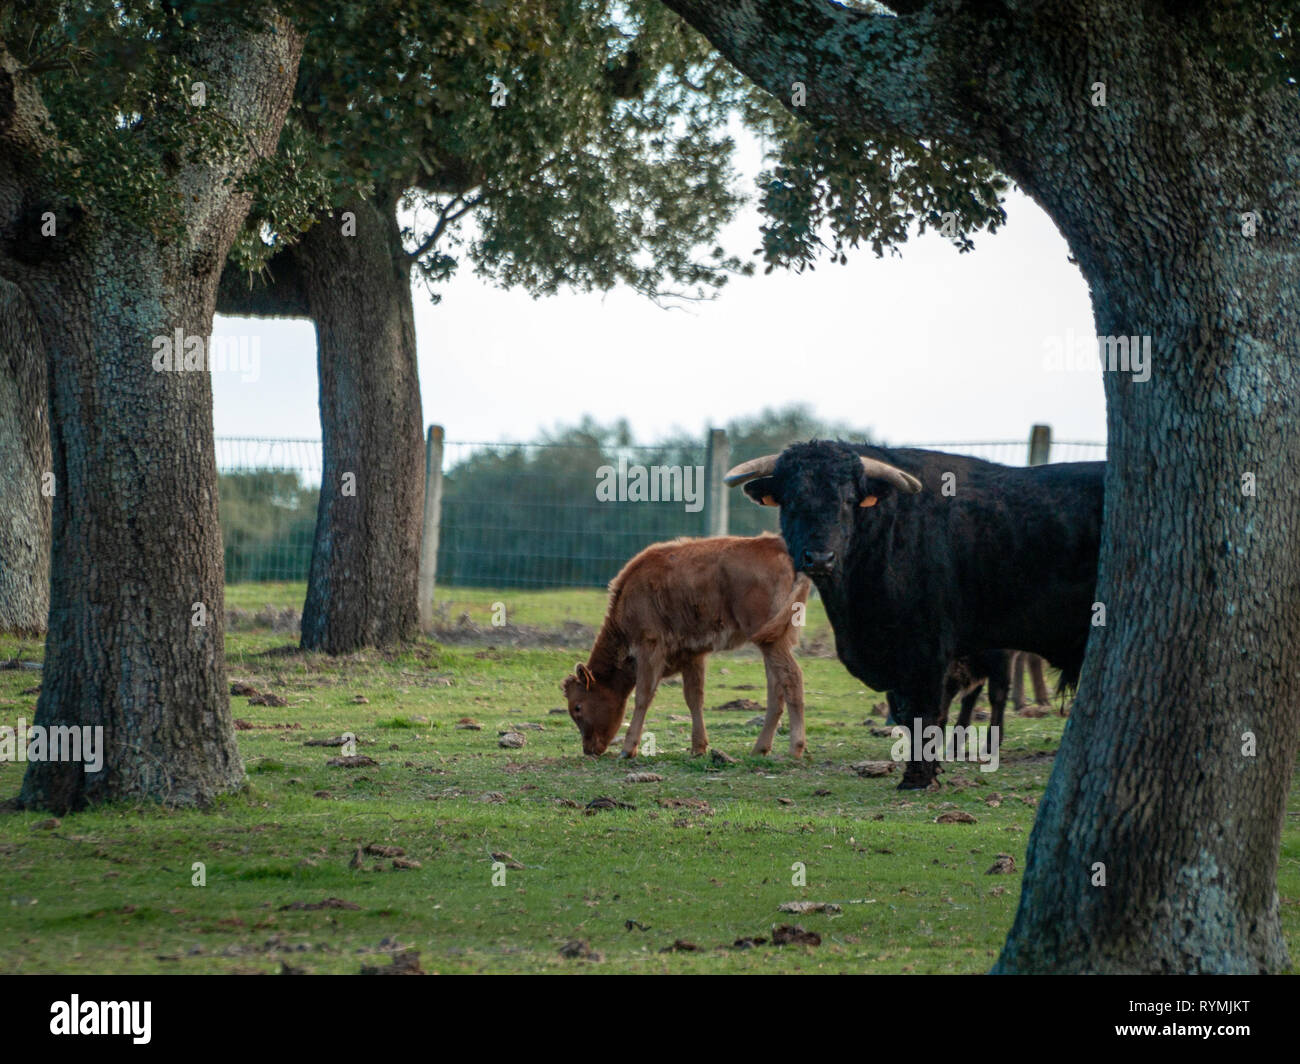 Bulls of toro de lidia breed in the dehesa in Salamanca, Spain. Concept of extensive livestock farming Stock Photo